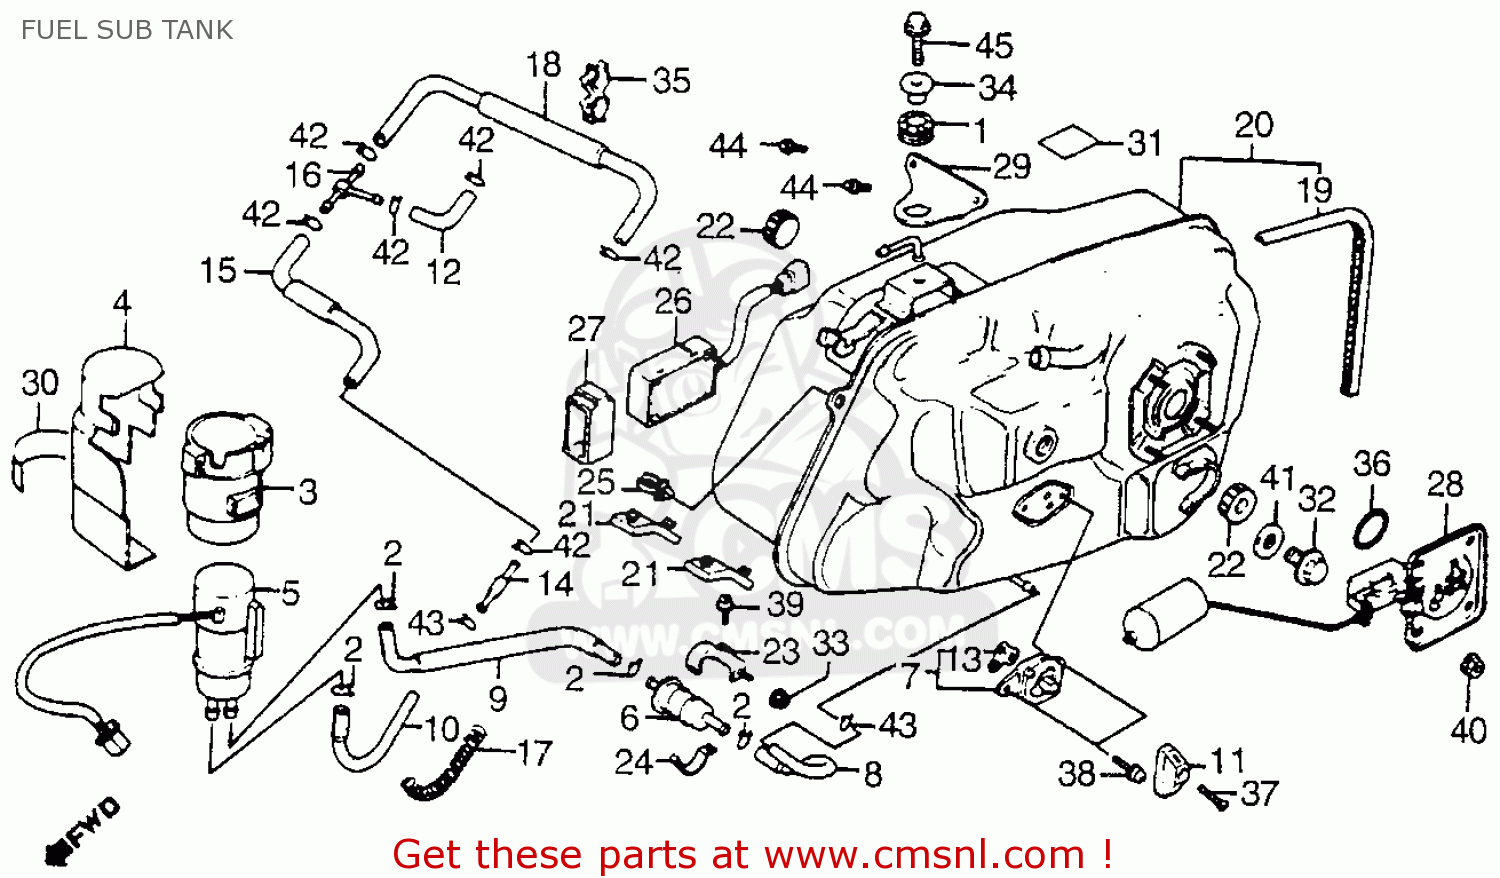 1986 Honda shadow 1100 parts breakdown #2